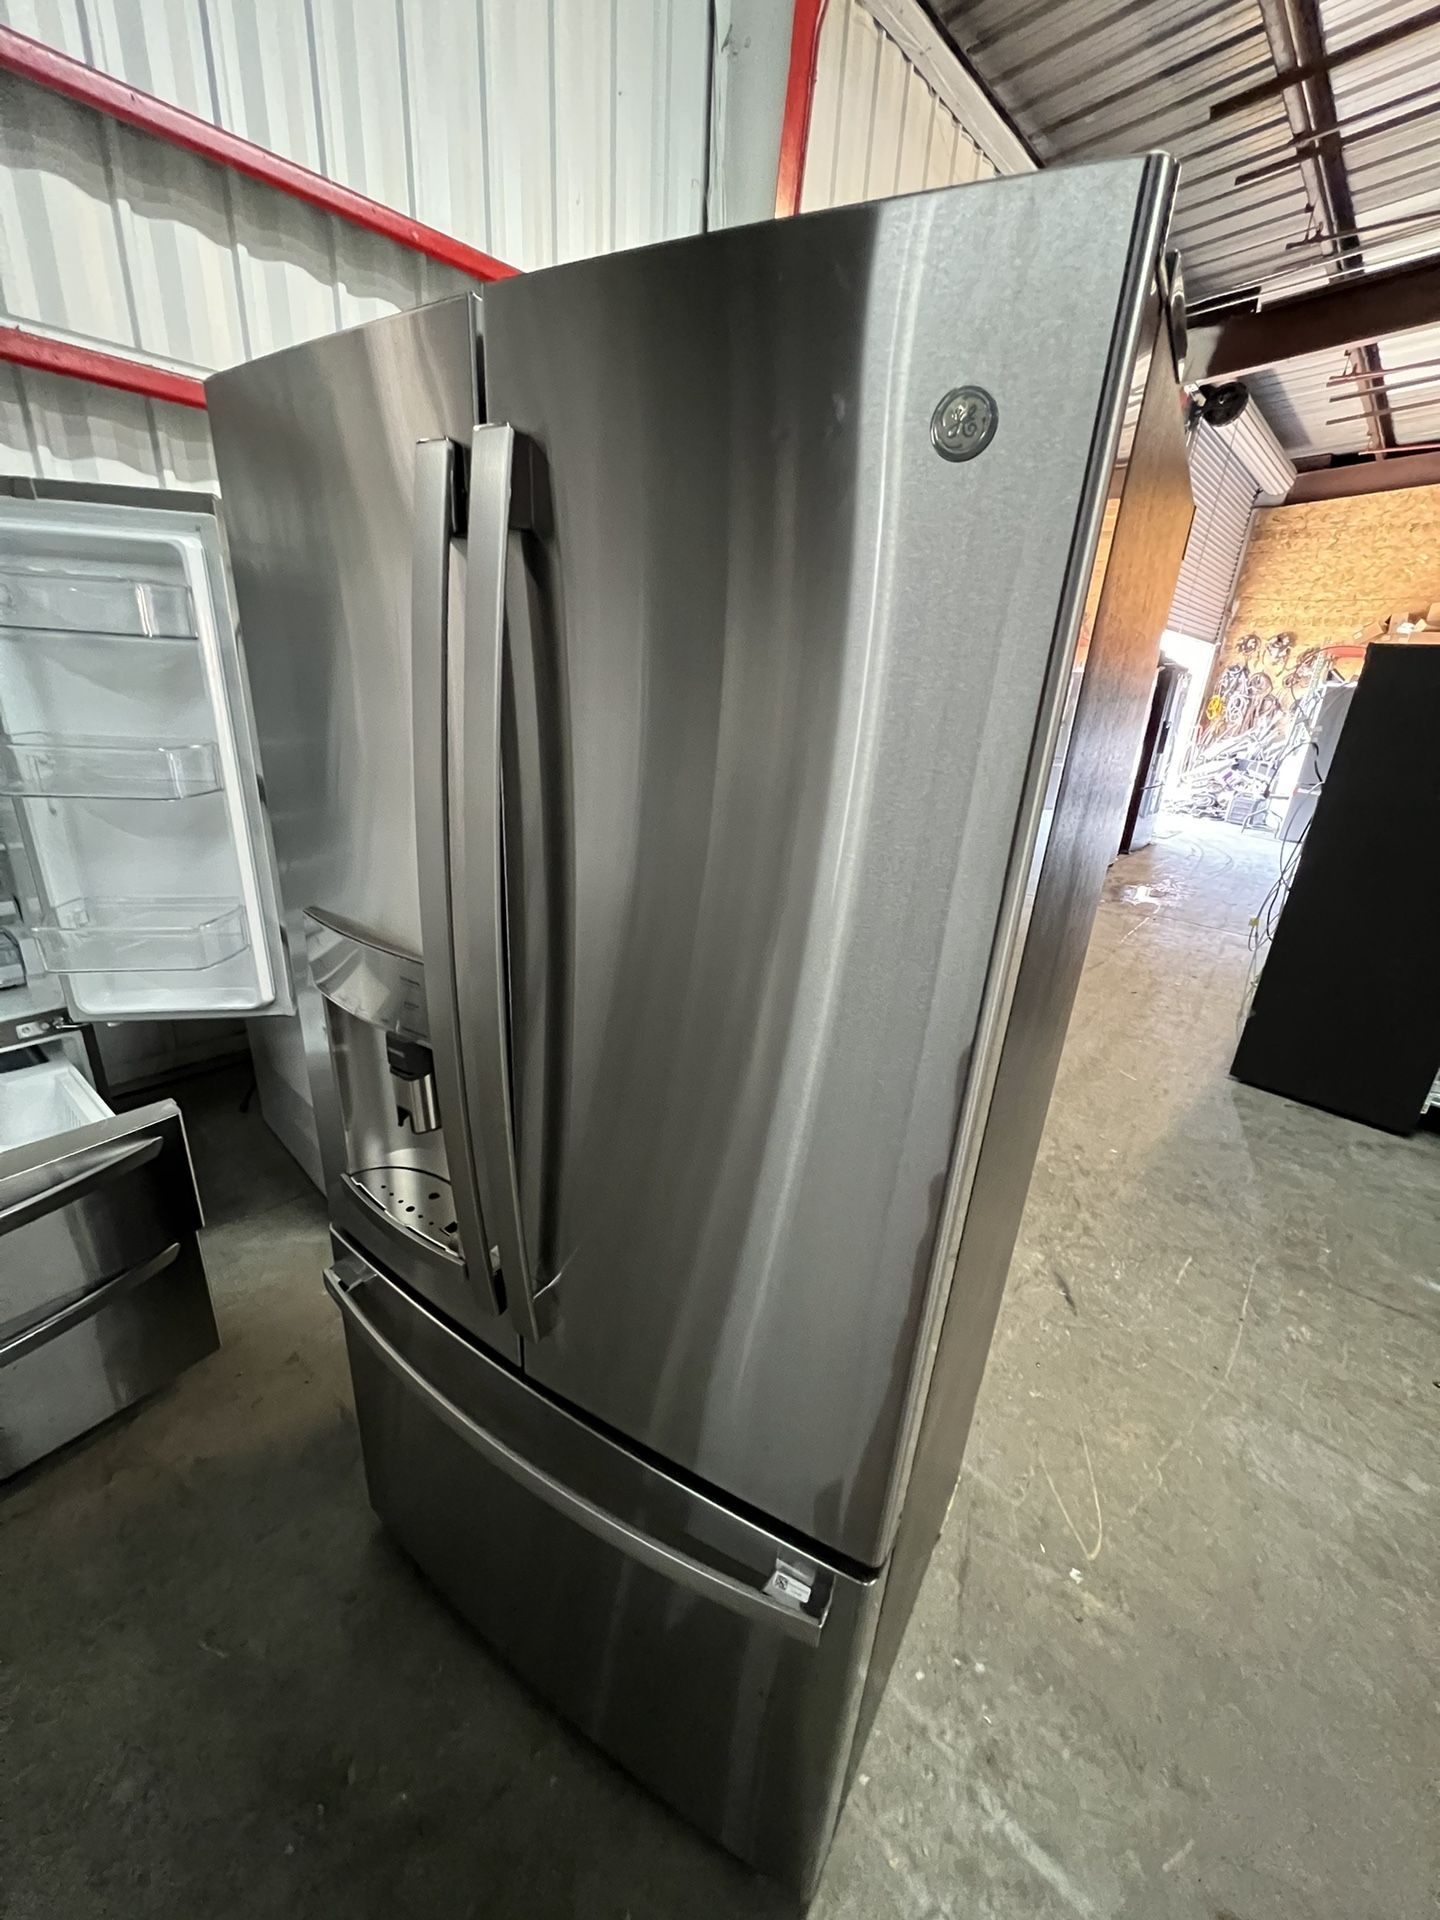 2022 GE Profile Counter Depth Refrigerator w/ Keurig 